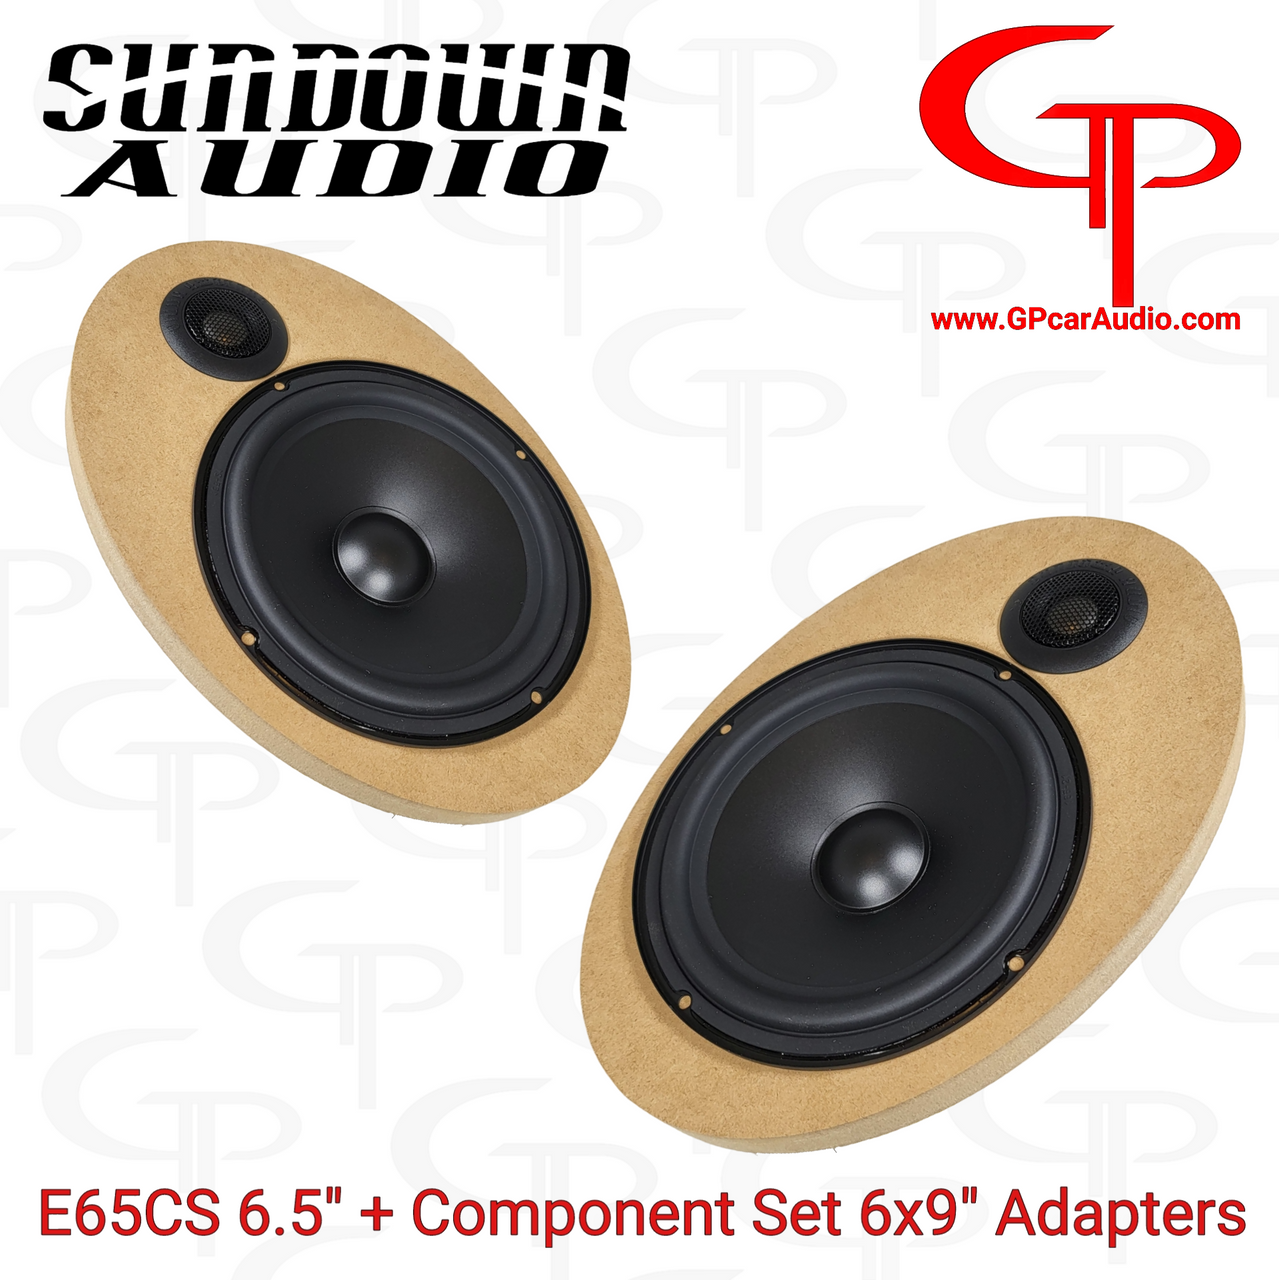 COMBO: E-6.5CS 6.5" Component Speaker Set + 6x9" Adapters (Pair)